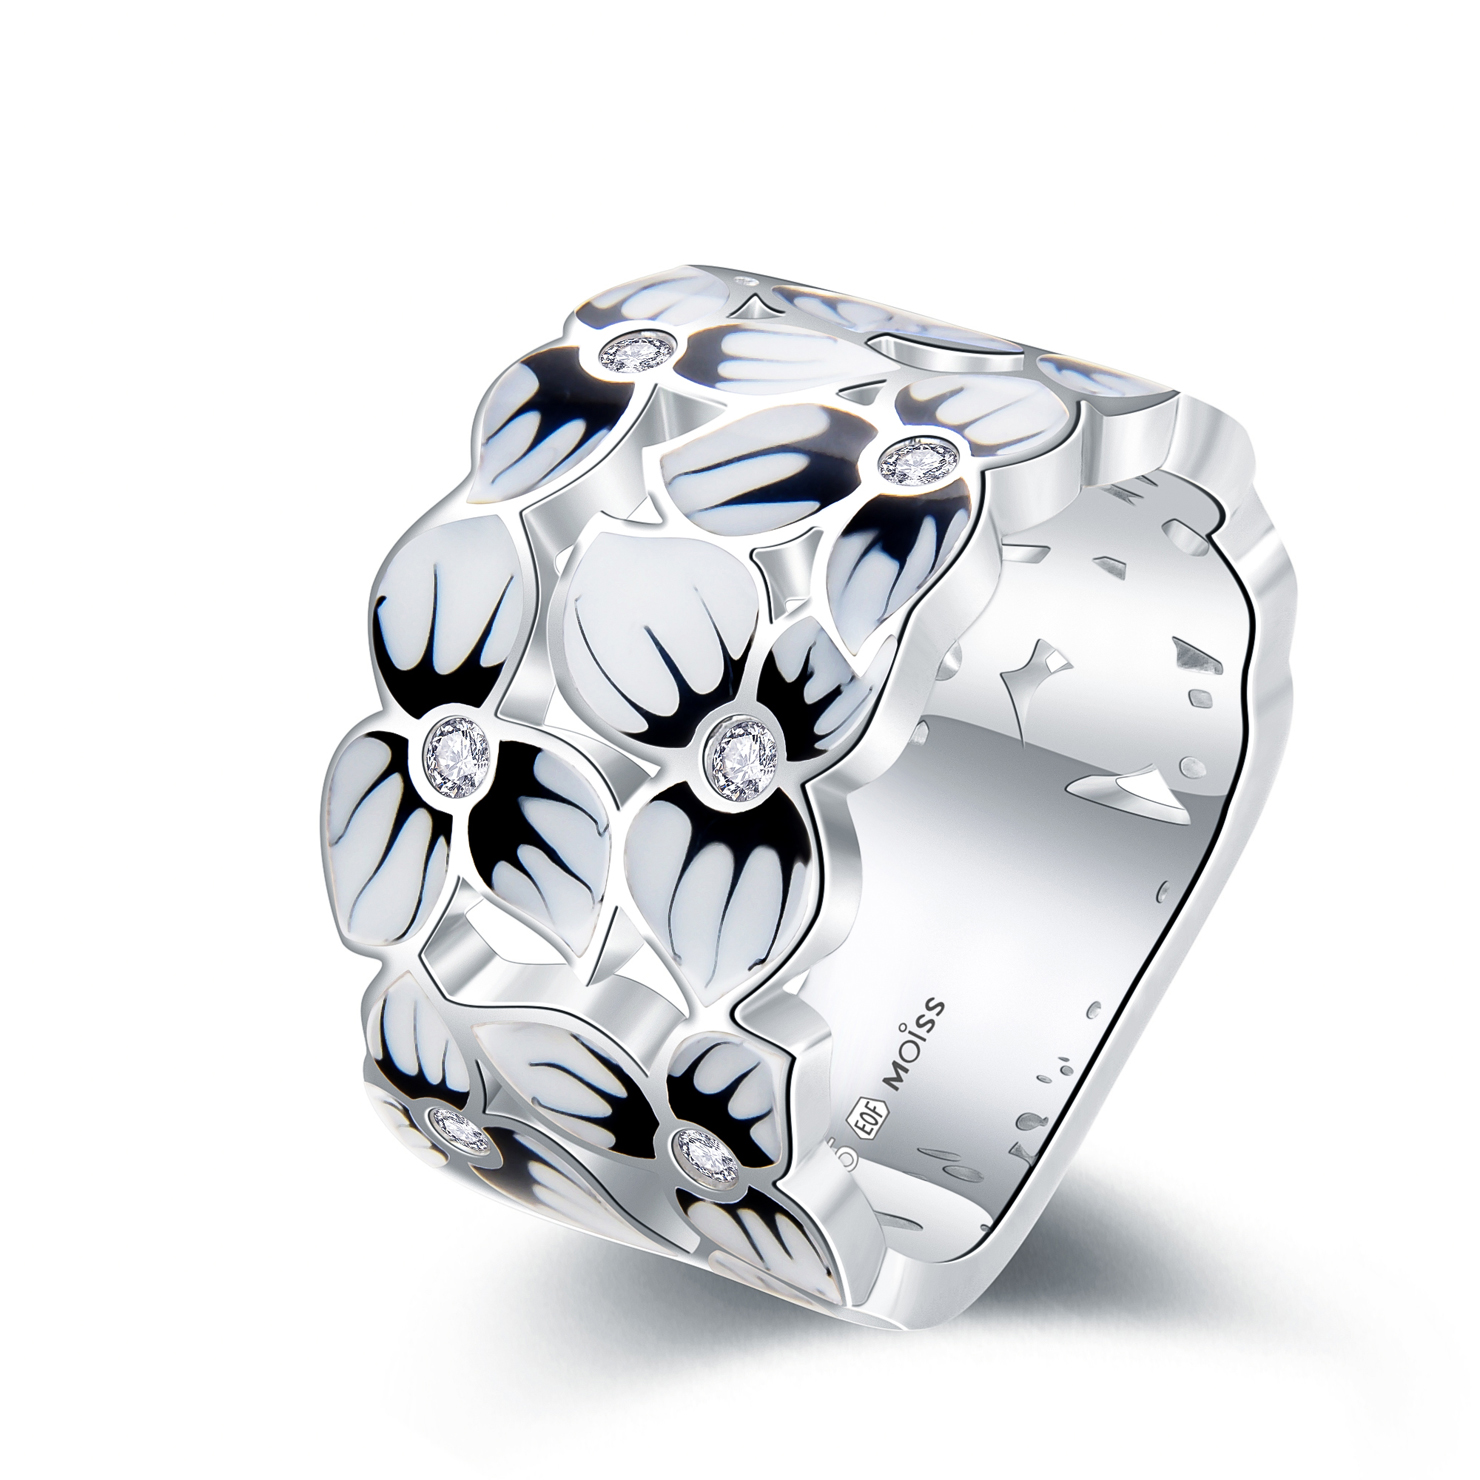 MOISS Moiss stříbrný prsten KVĚTINY smalt R0001531 Velikost 55 mm R0001531